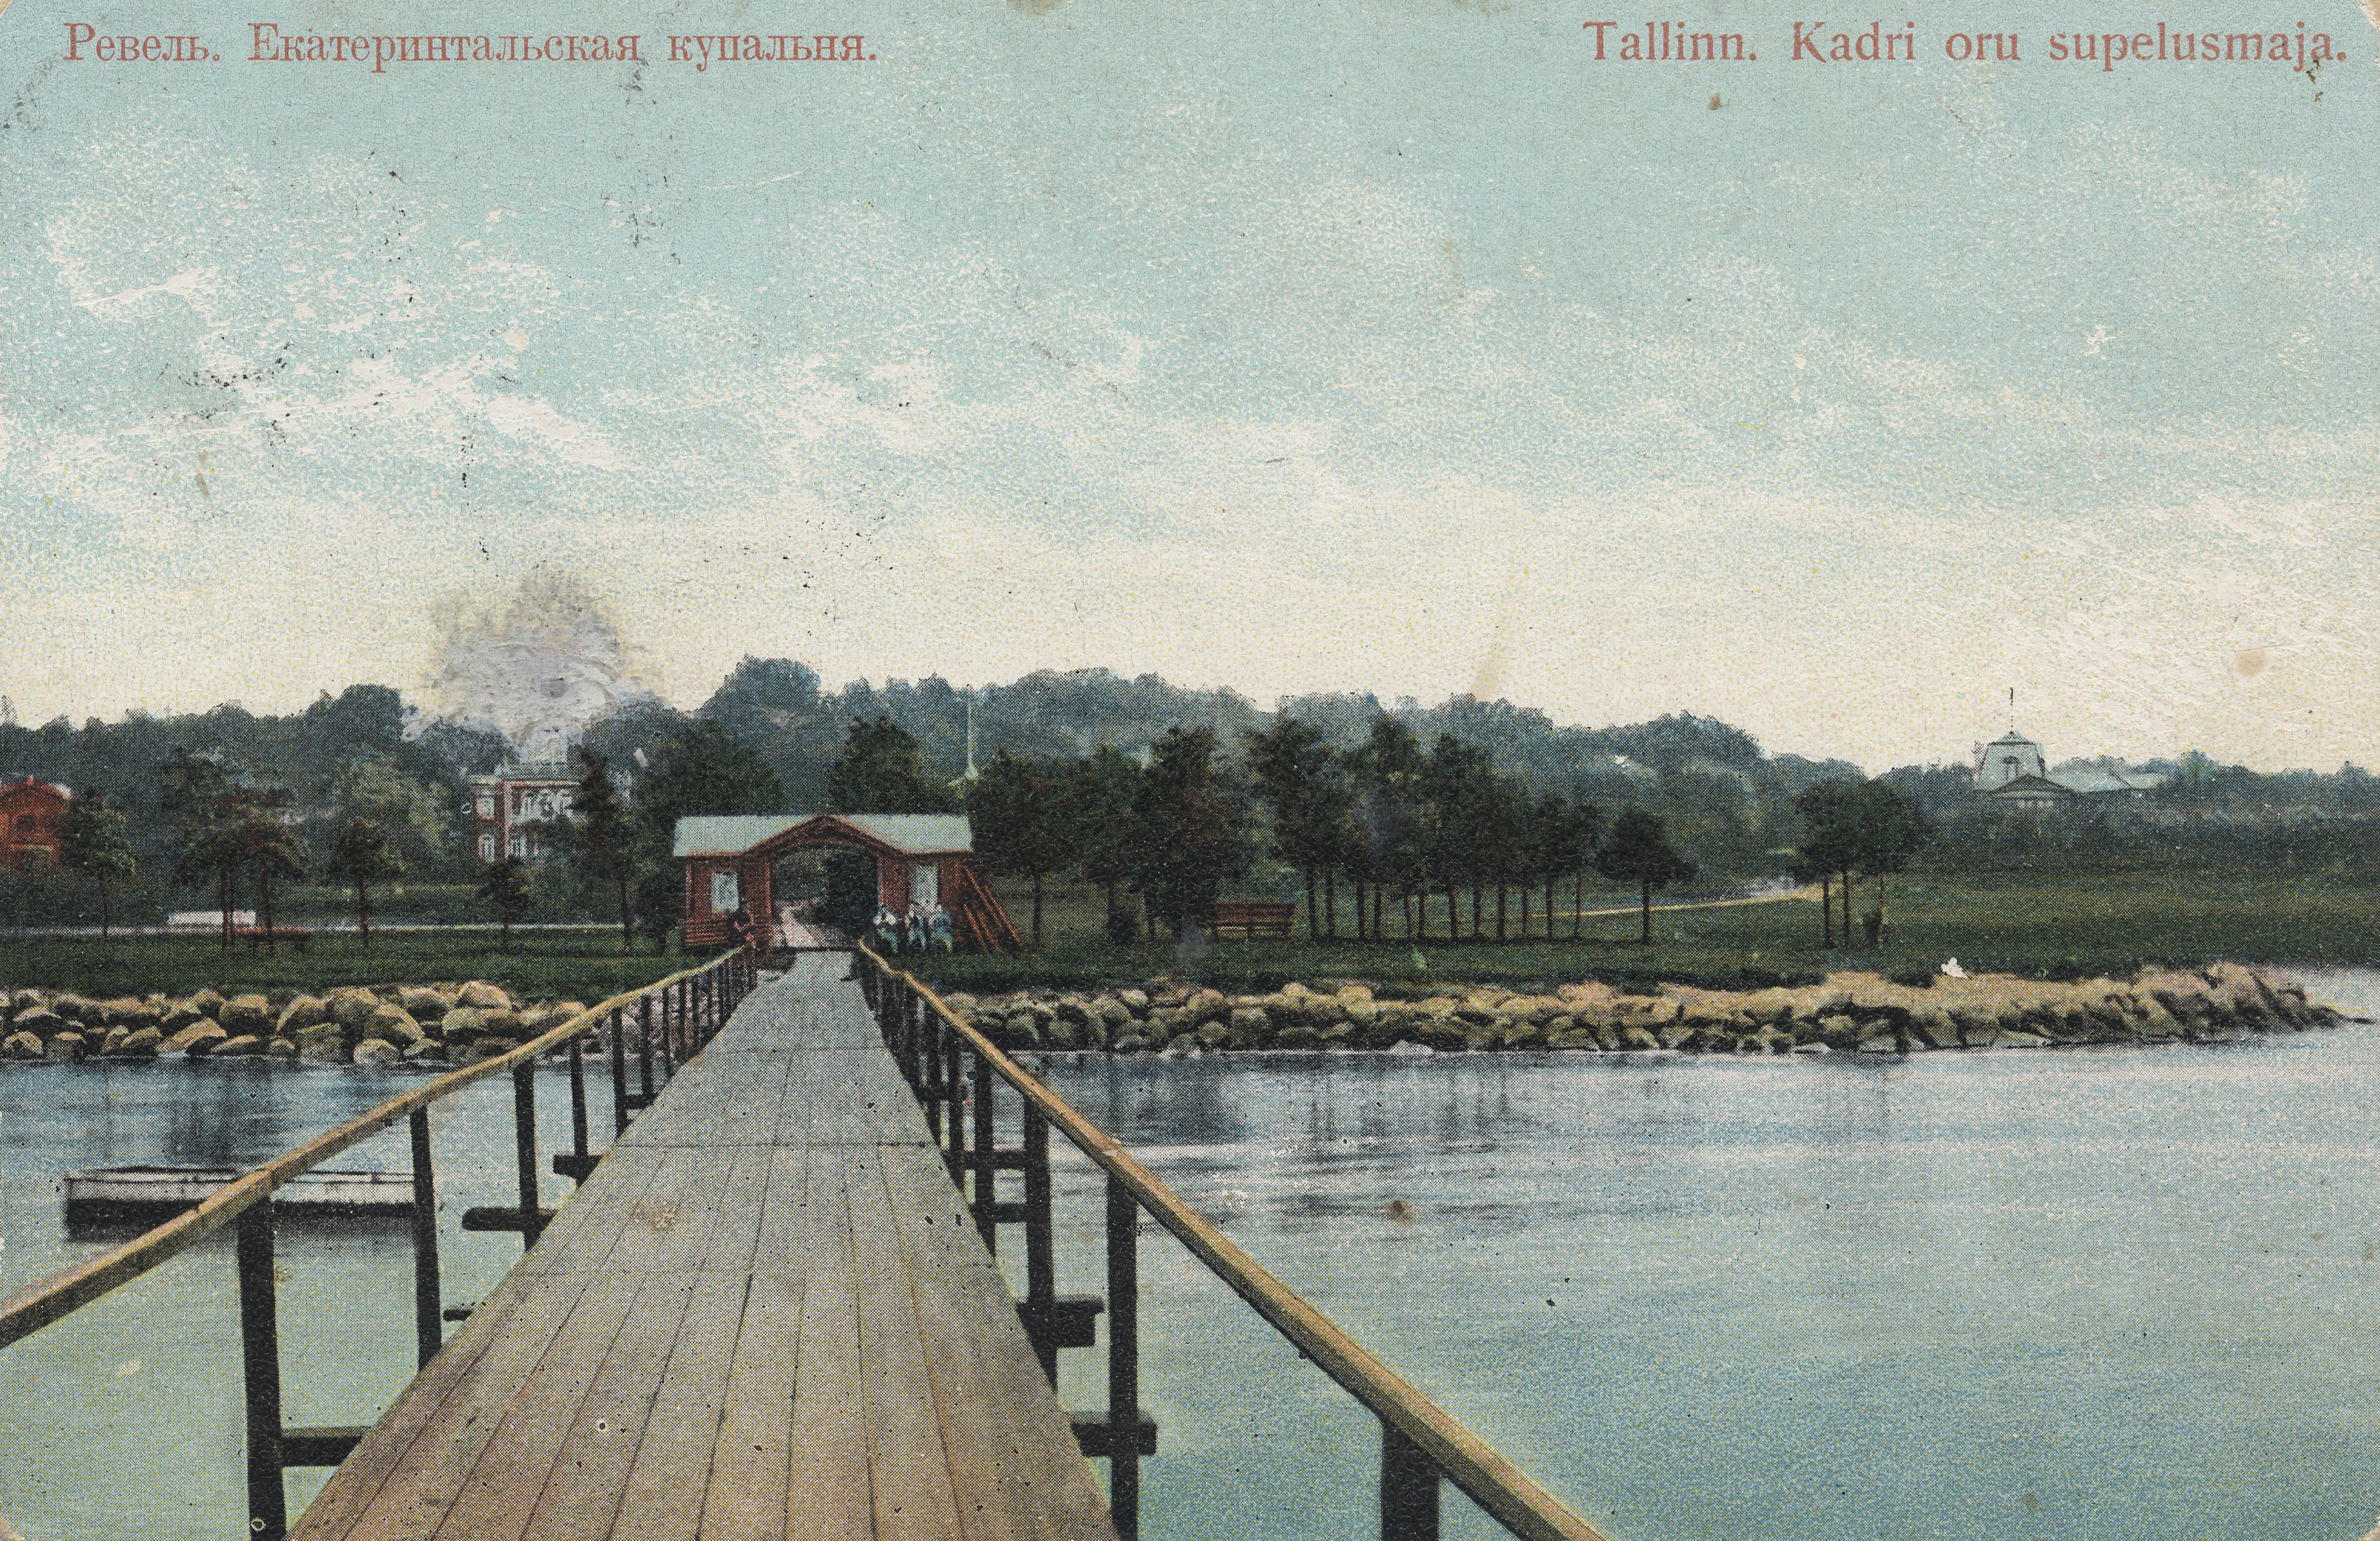 Revel : Екатеринтальский swimming pool = Tallinn : Kadri valley swimming pool